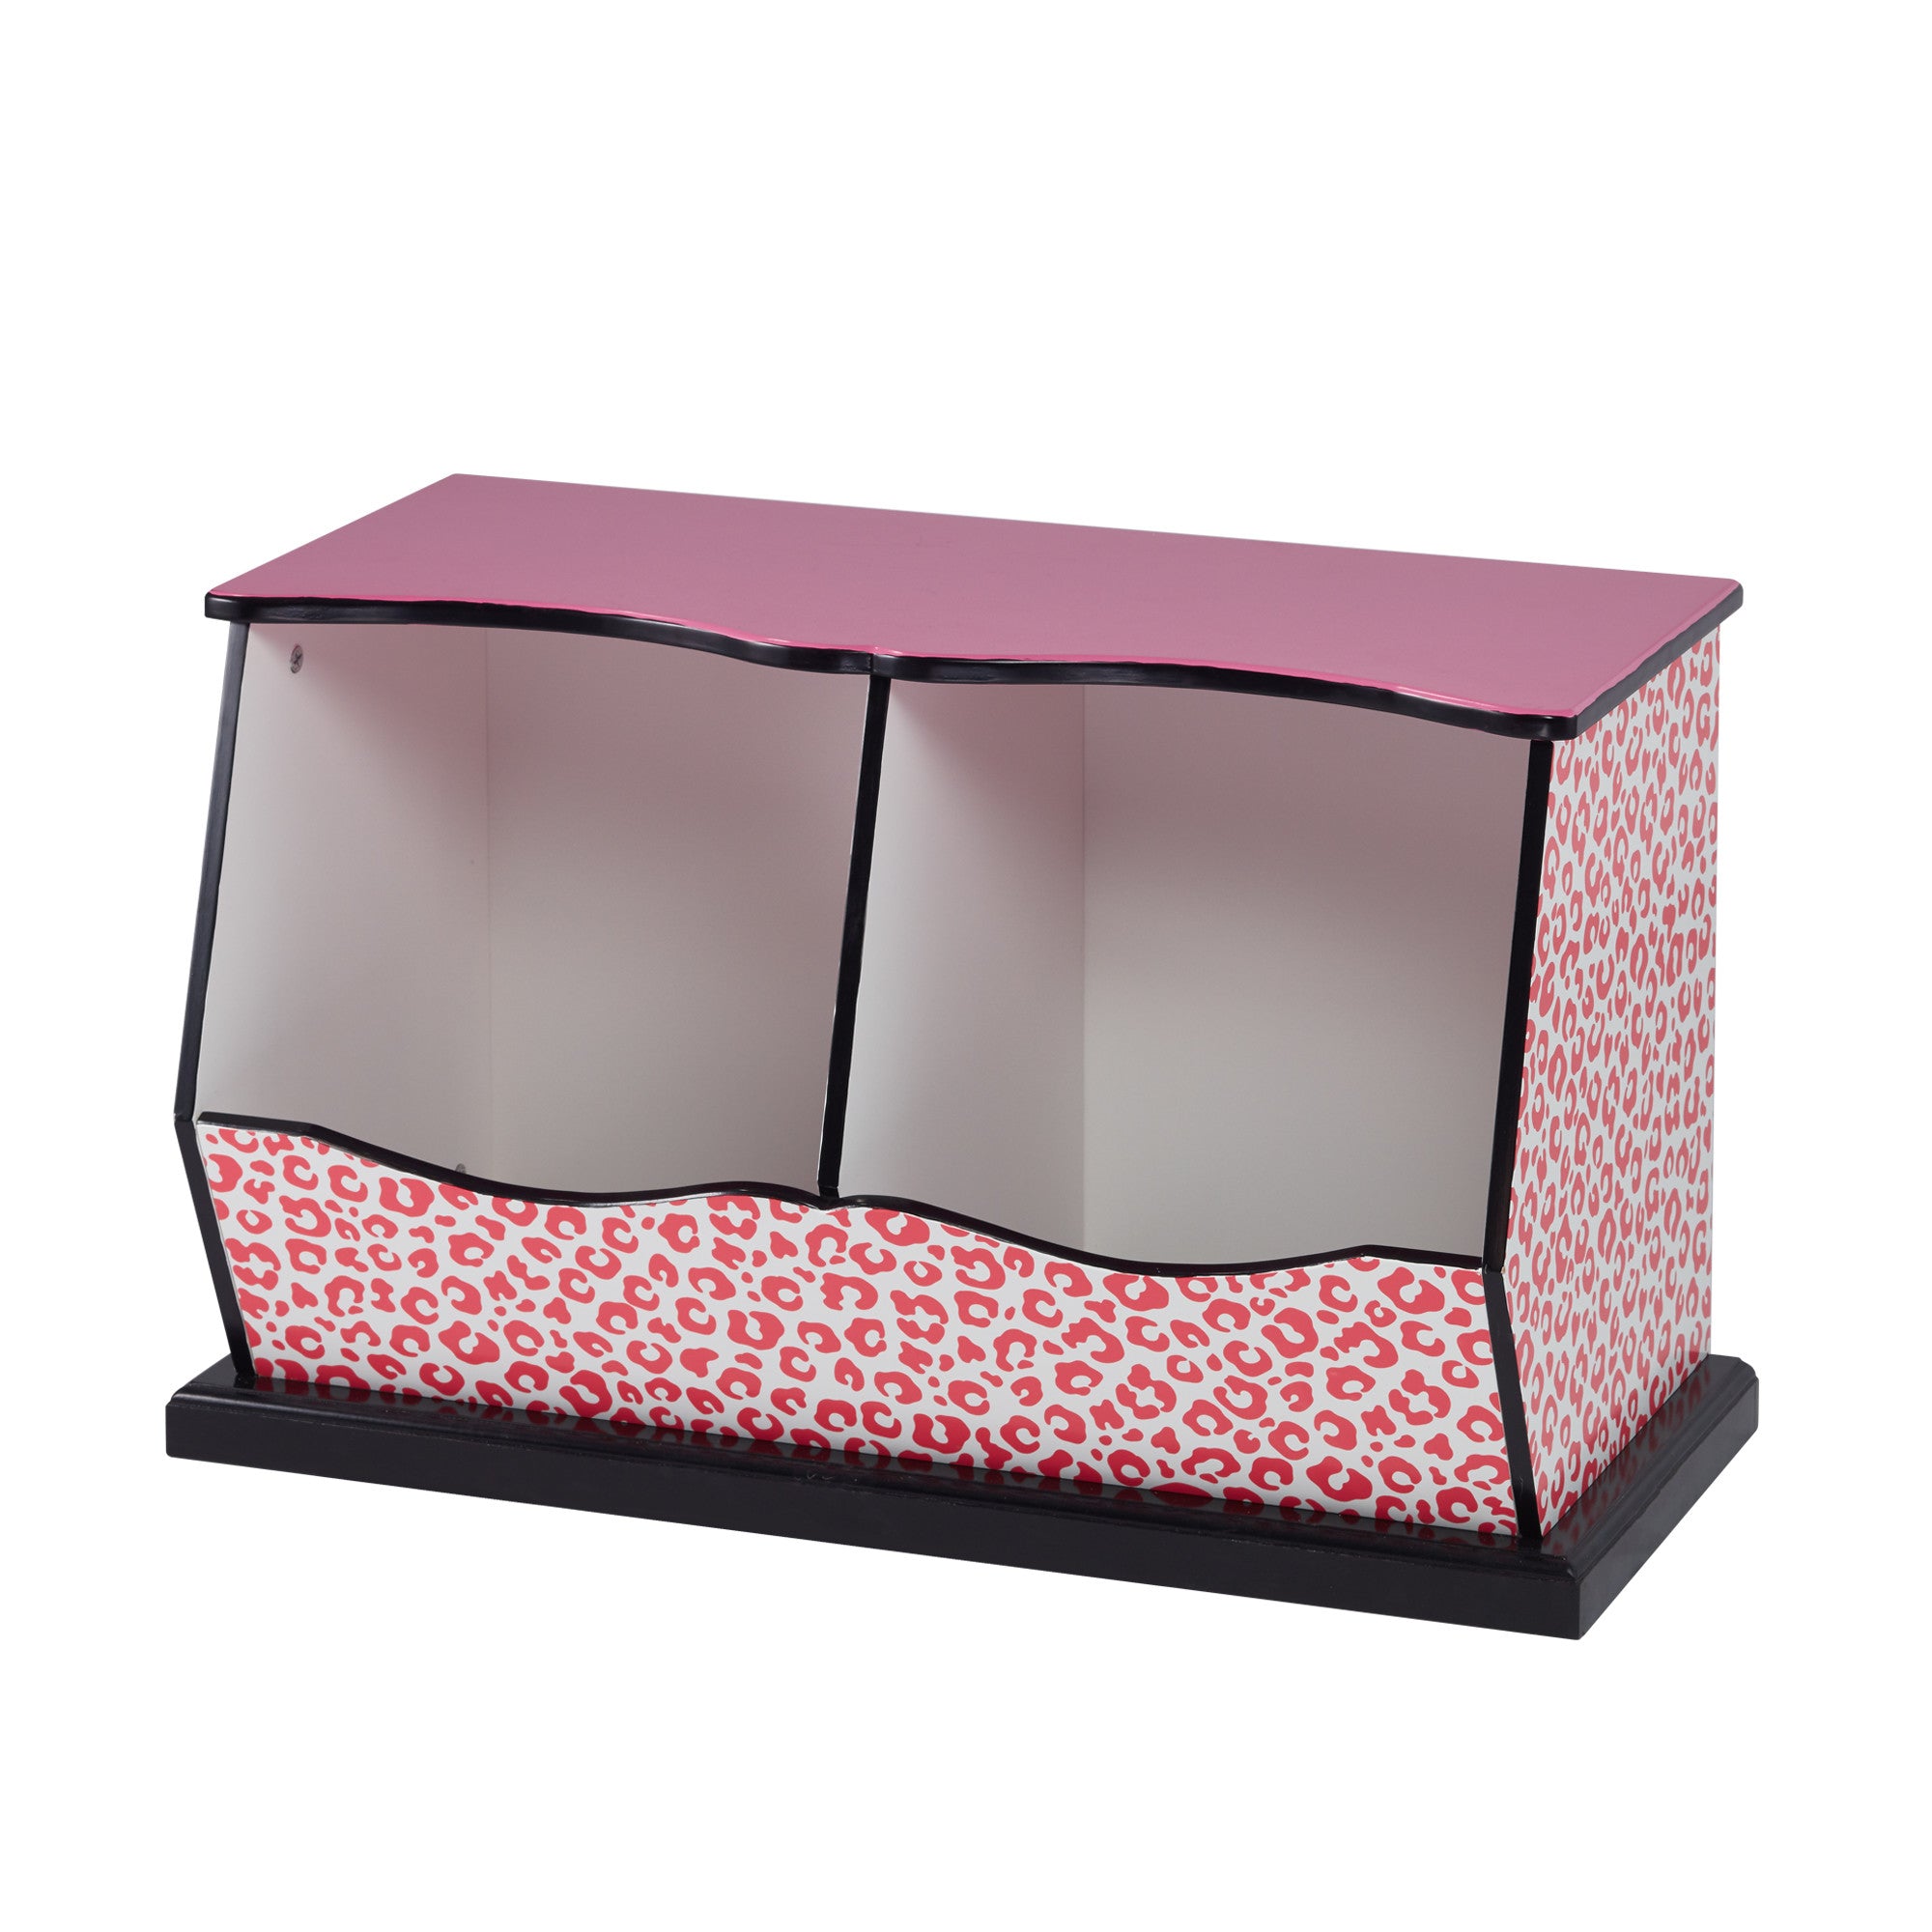 Fantasy Fields Fashion Leopard Prints Miranda Toy Cubby Storage, Pink/Black